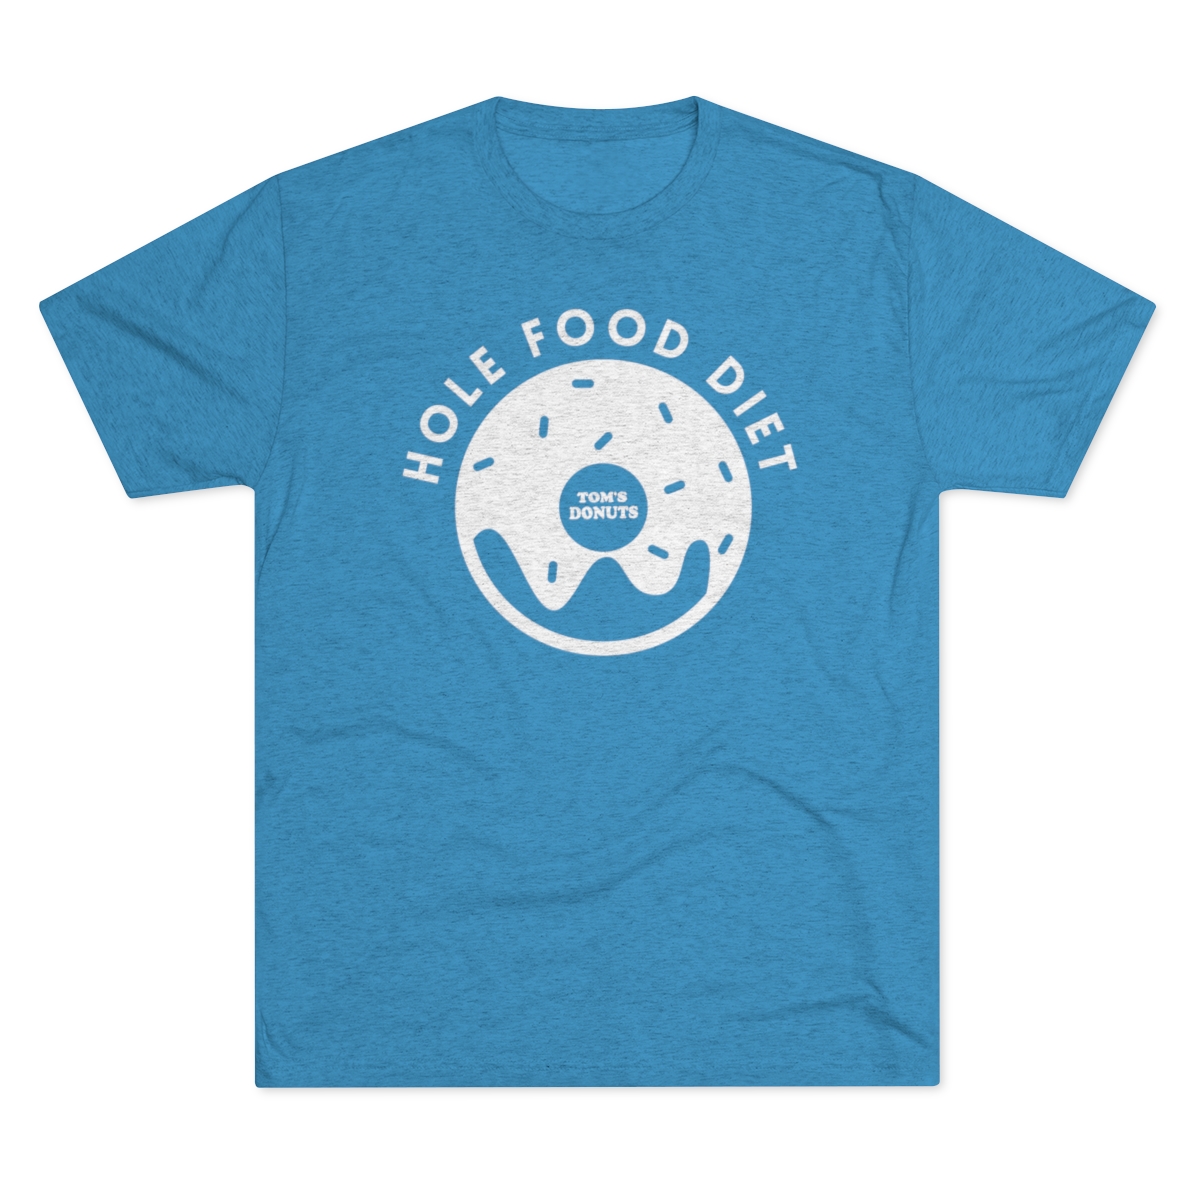 Tom’s Donut Original “Hole Food Diet” T-shirts